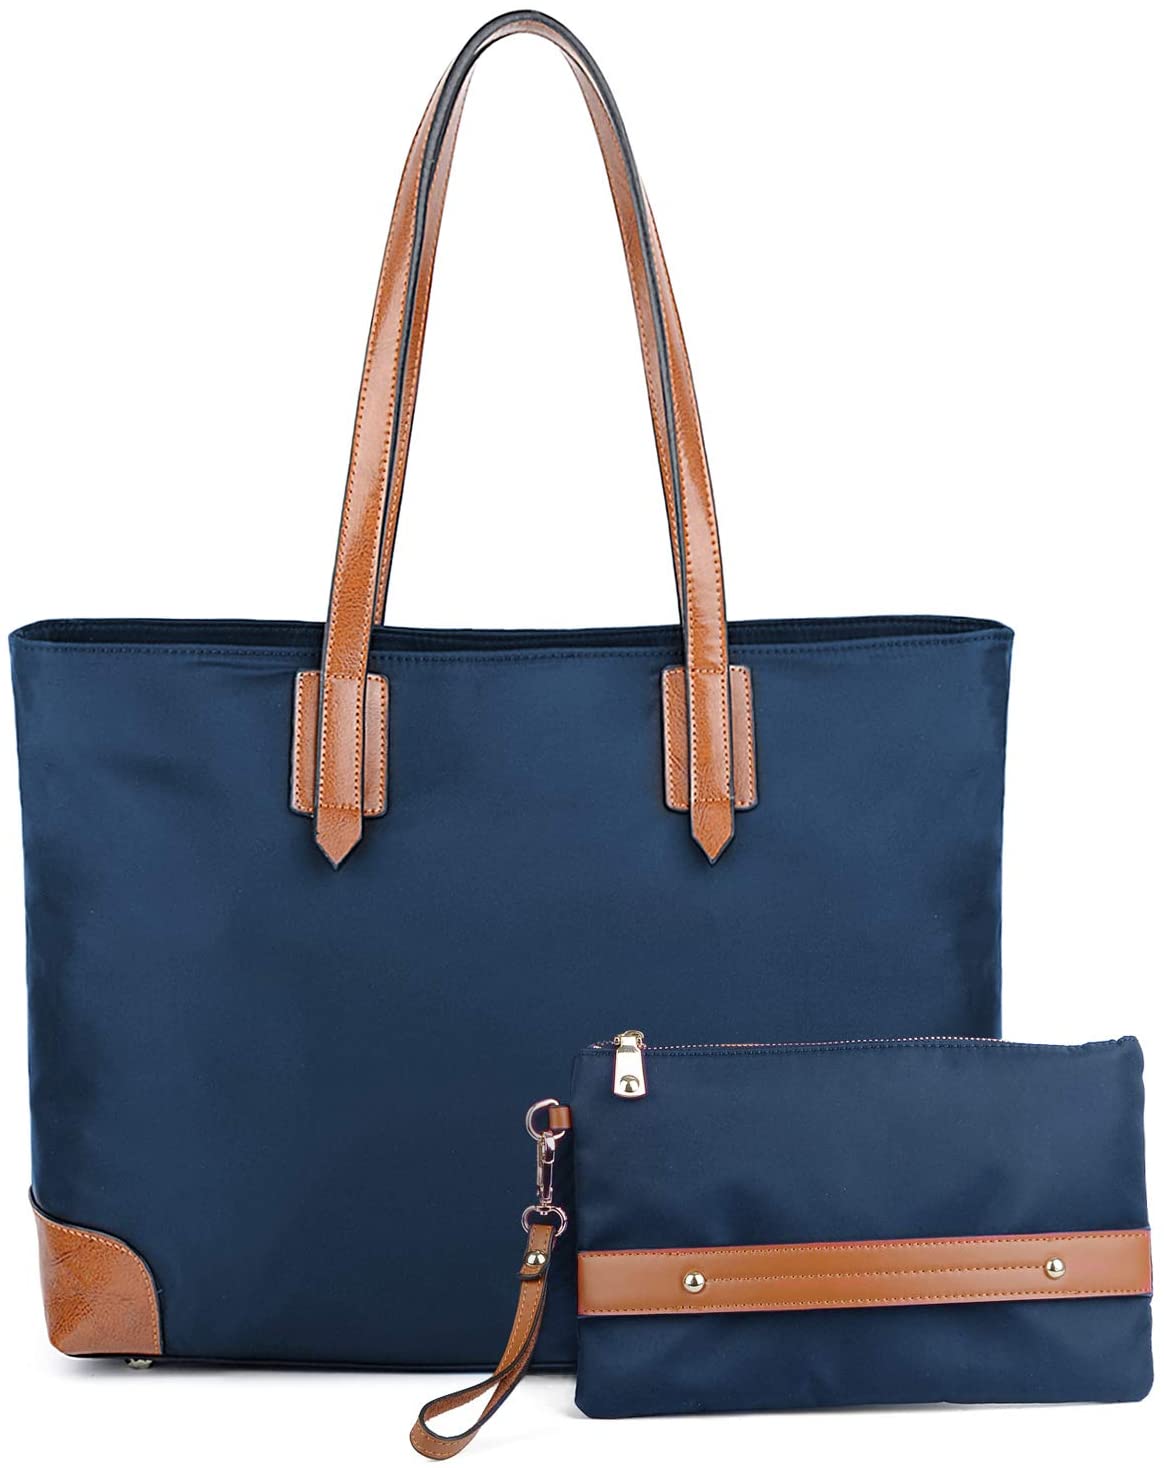 YALUXE Women’s Oxford Tote Light Weight Handbag Travel Shoulder Bag ...